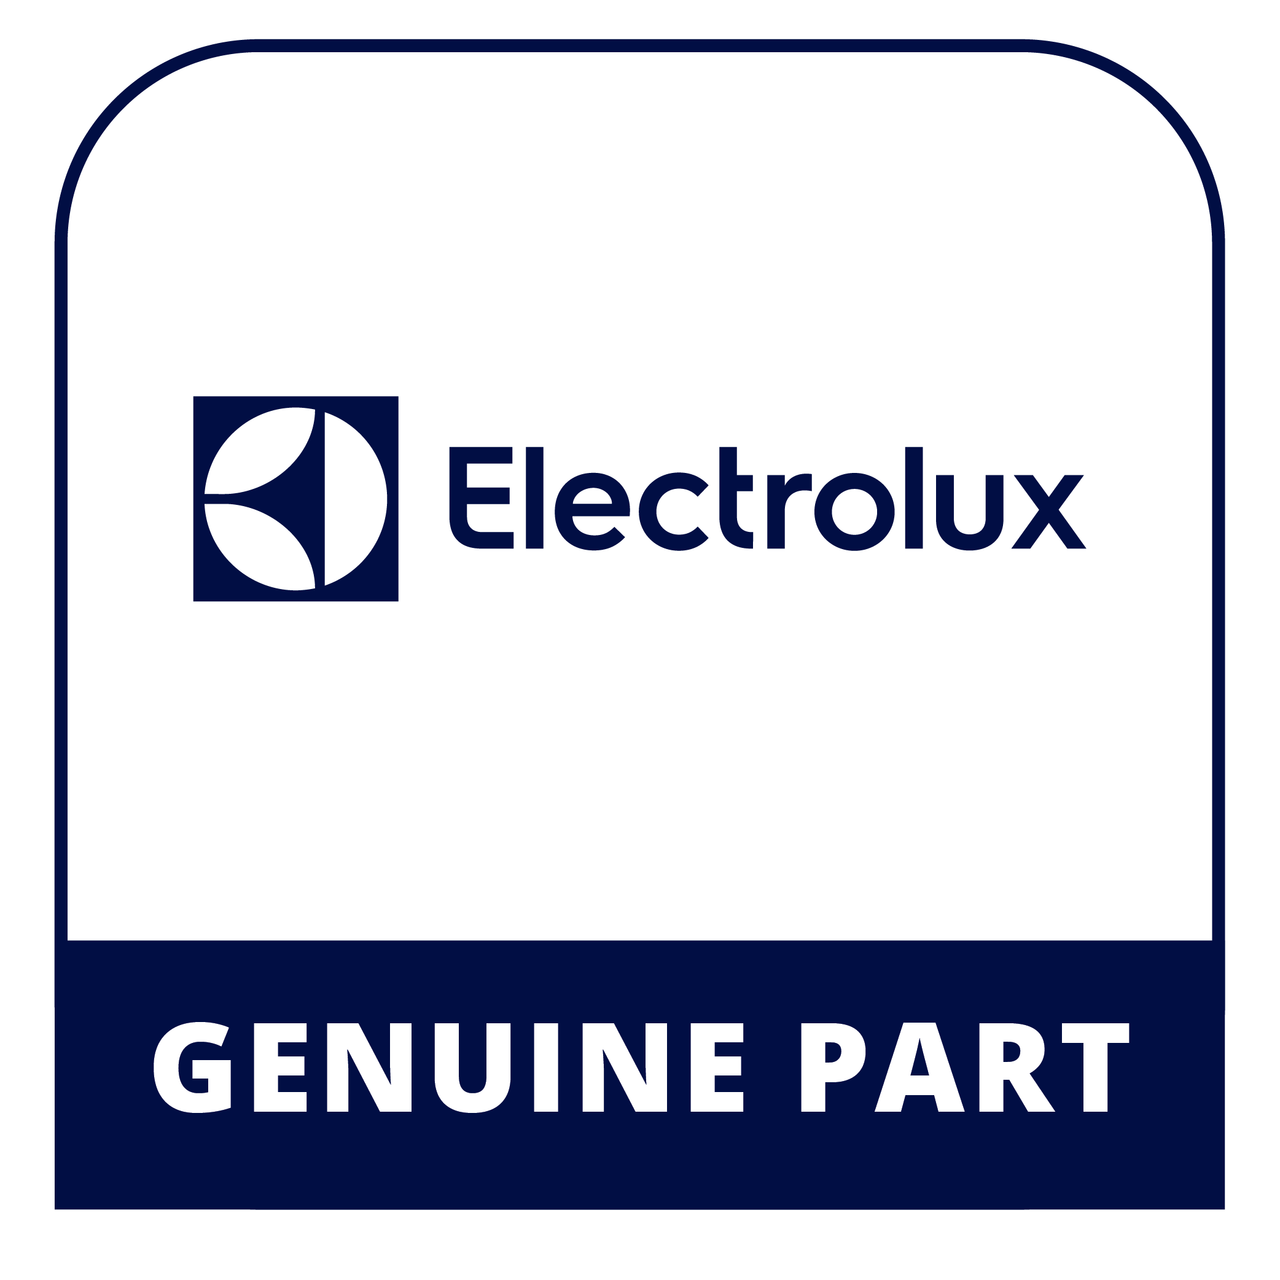 Frigidaire - Electrolux 5304470281 Motor - Genuine Electrolux Part